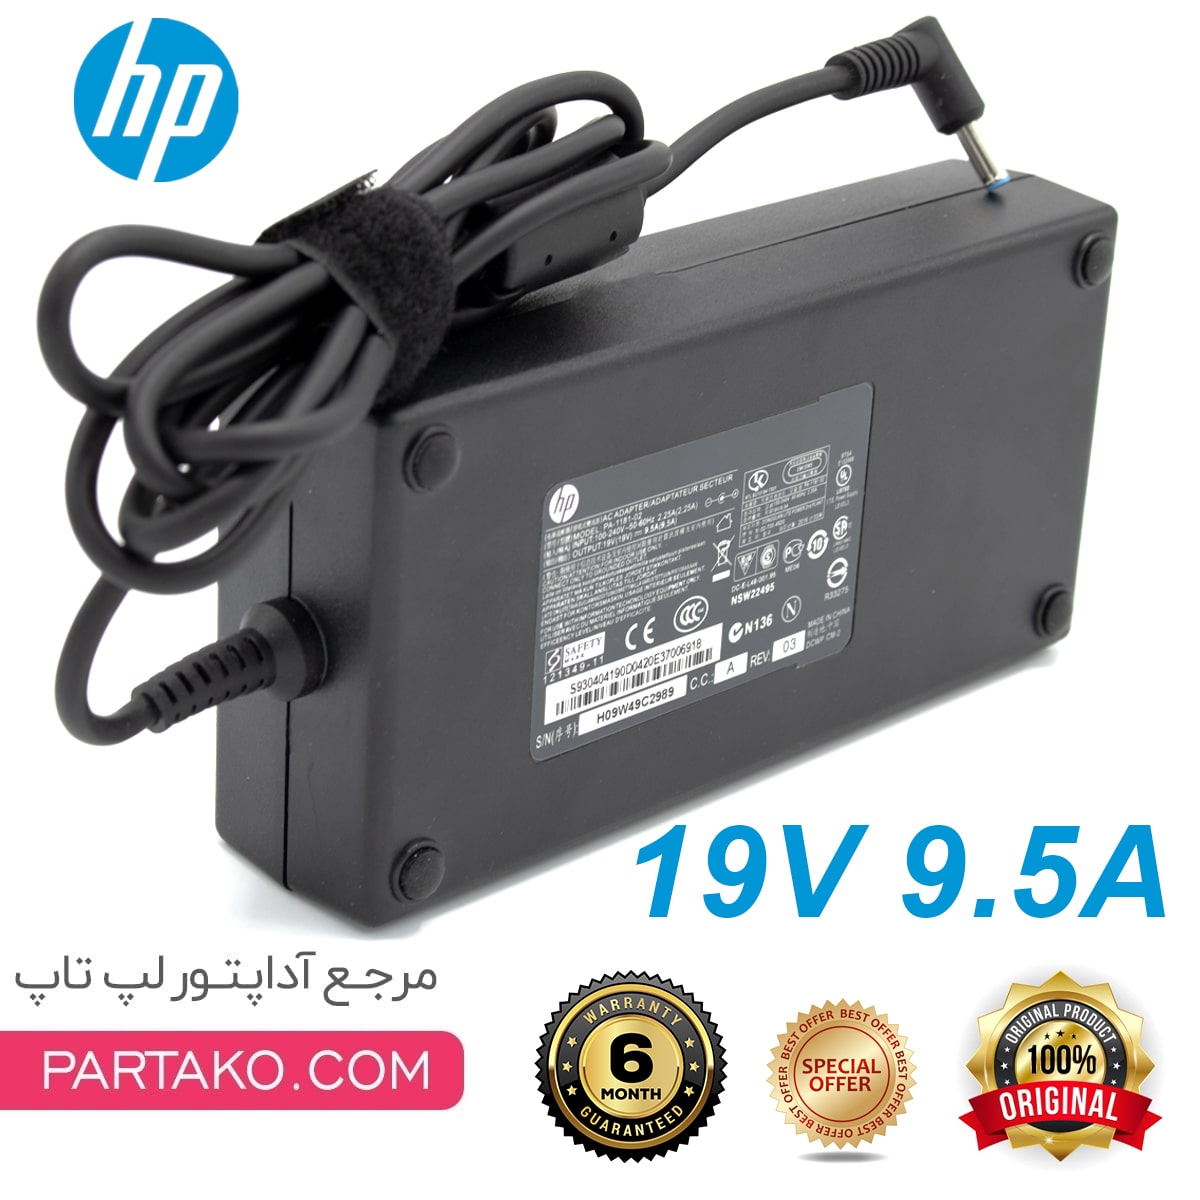 HP 19V 9.5A CONNECTOR 4.5 * 3.0